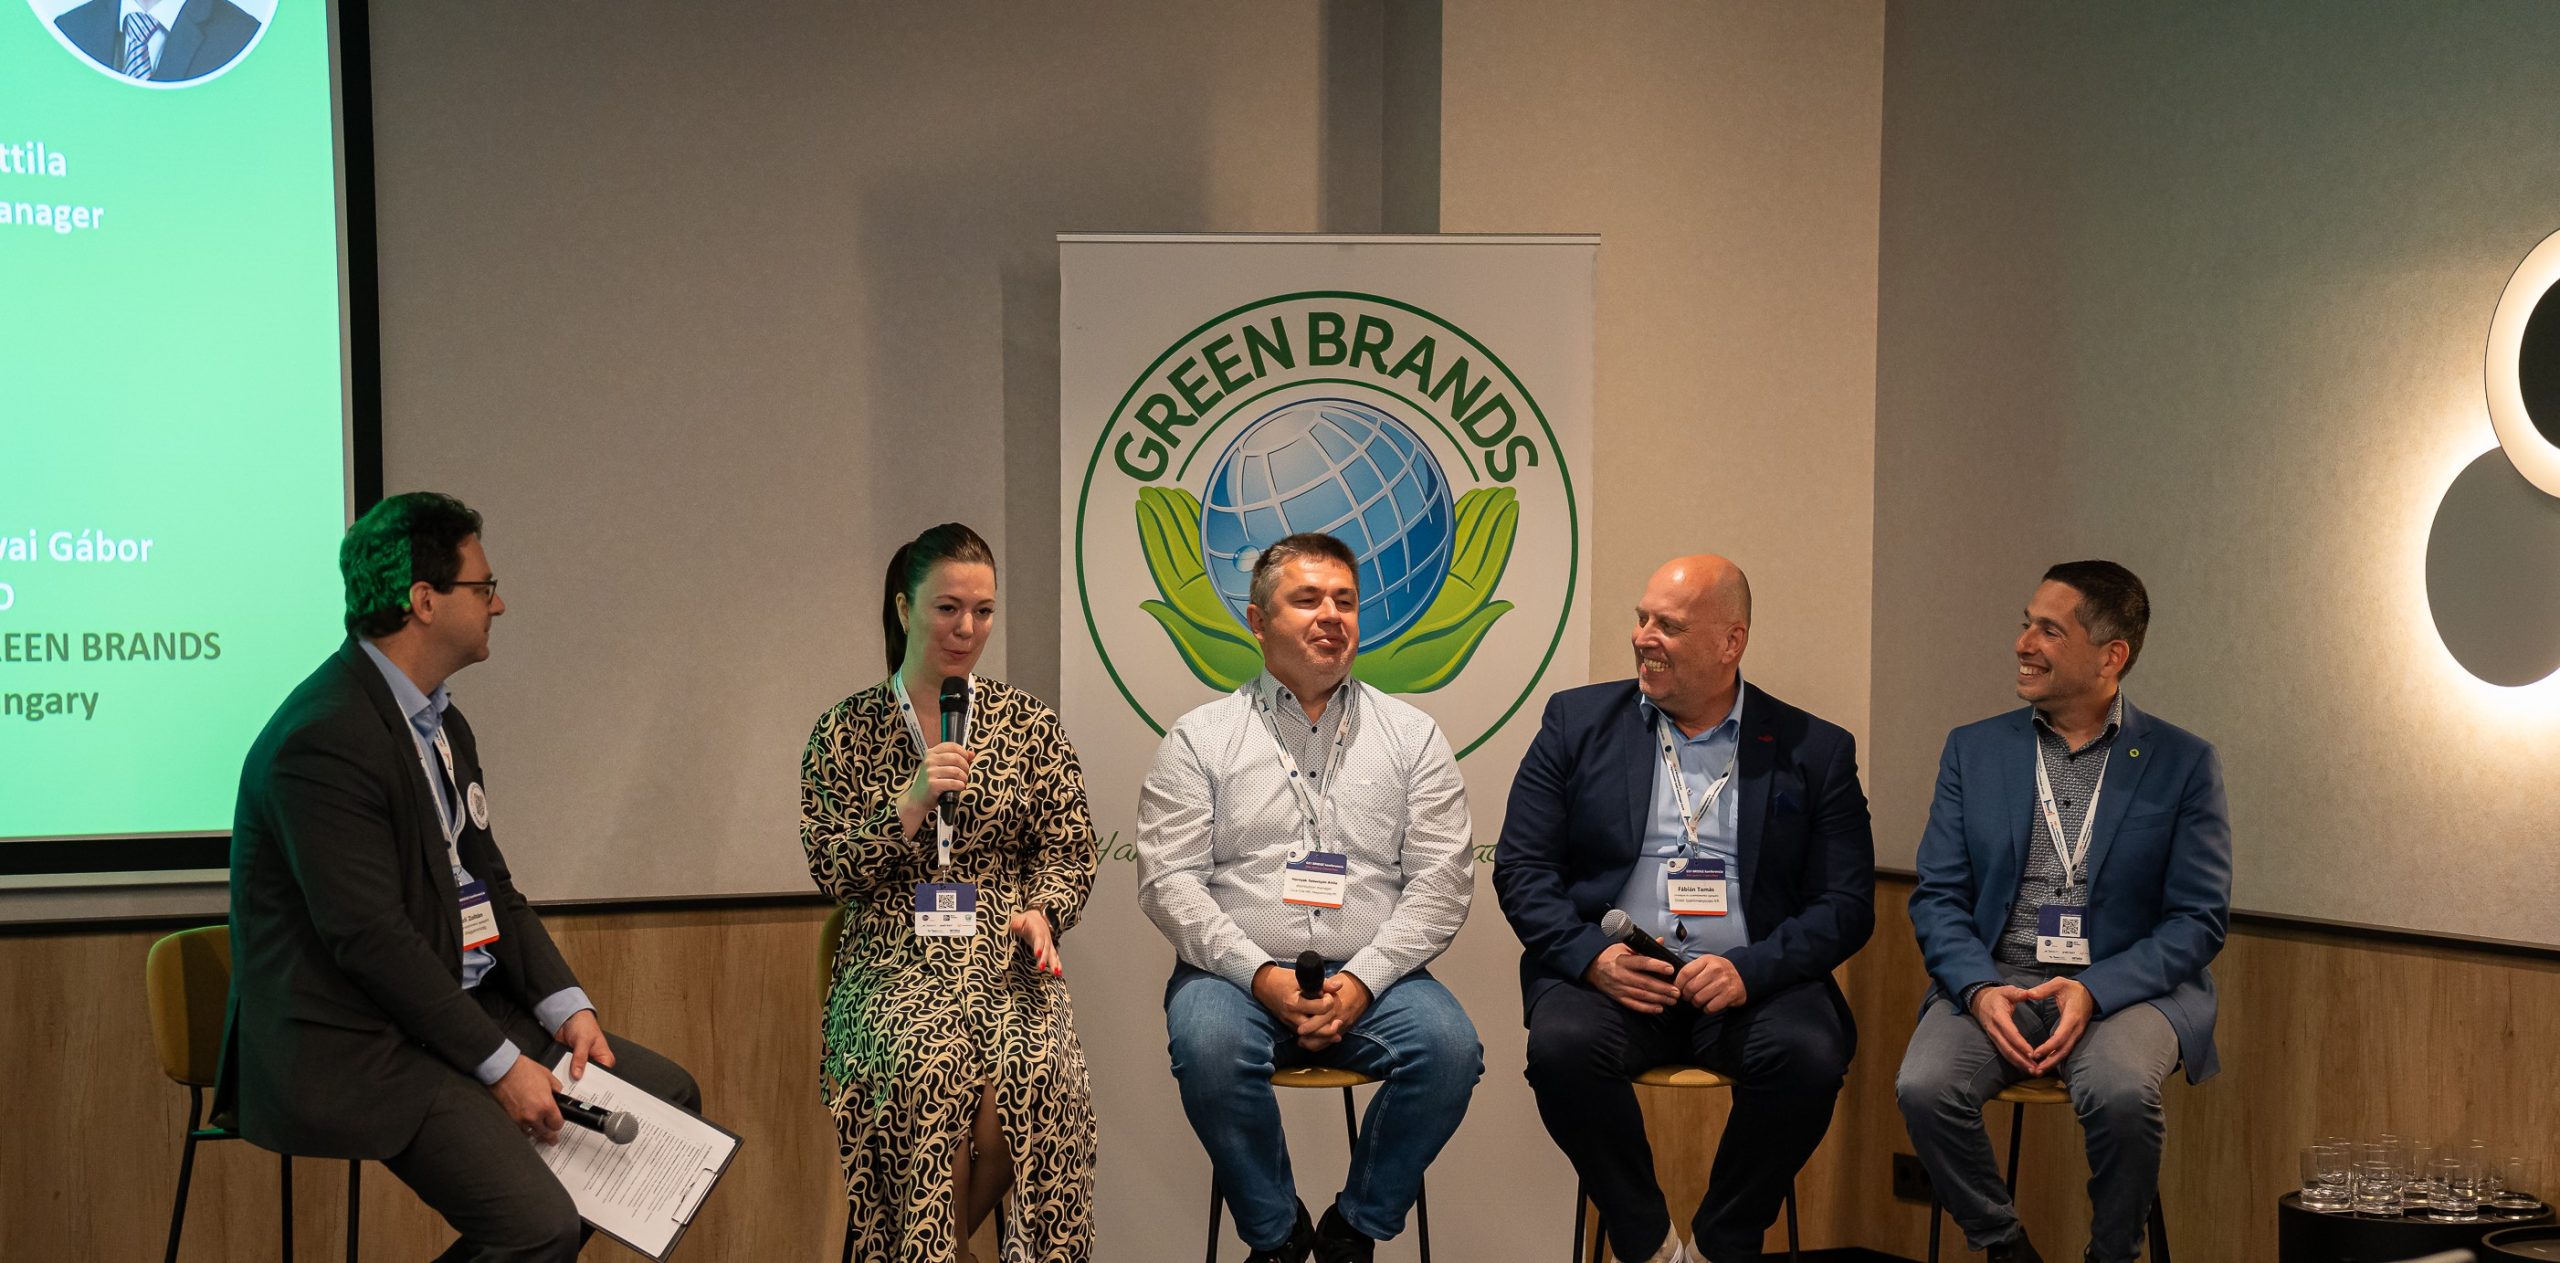 Green Brands - Lévai Gábor a GS1 konferencián